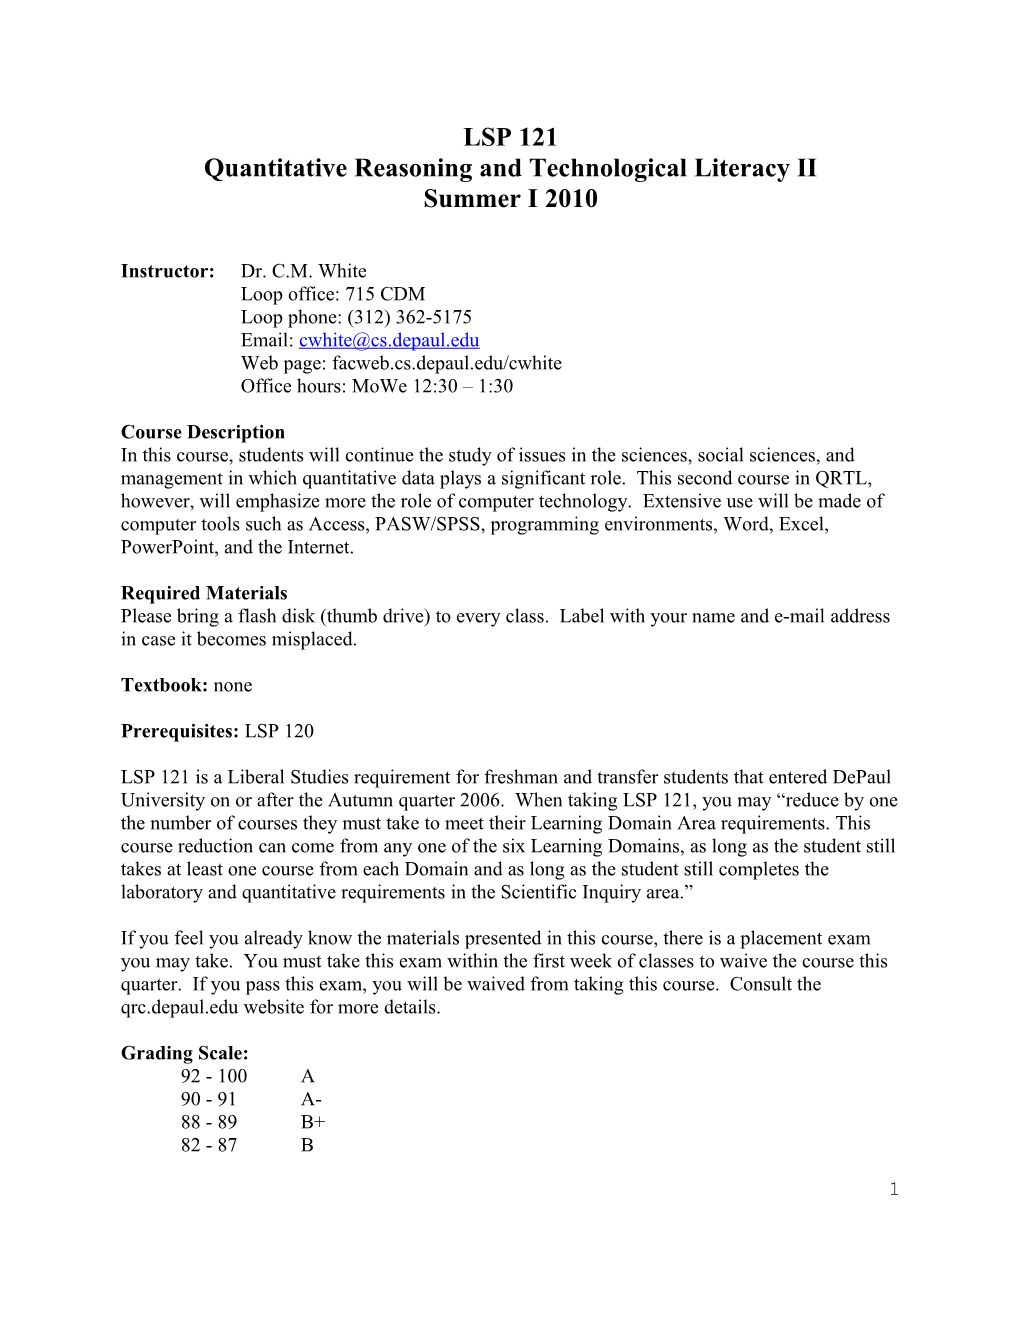 Quantitative Reasoning and Technological Literacy II